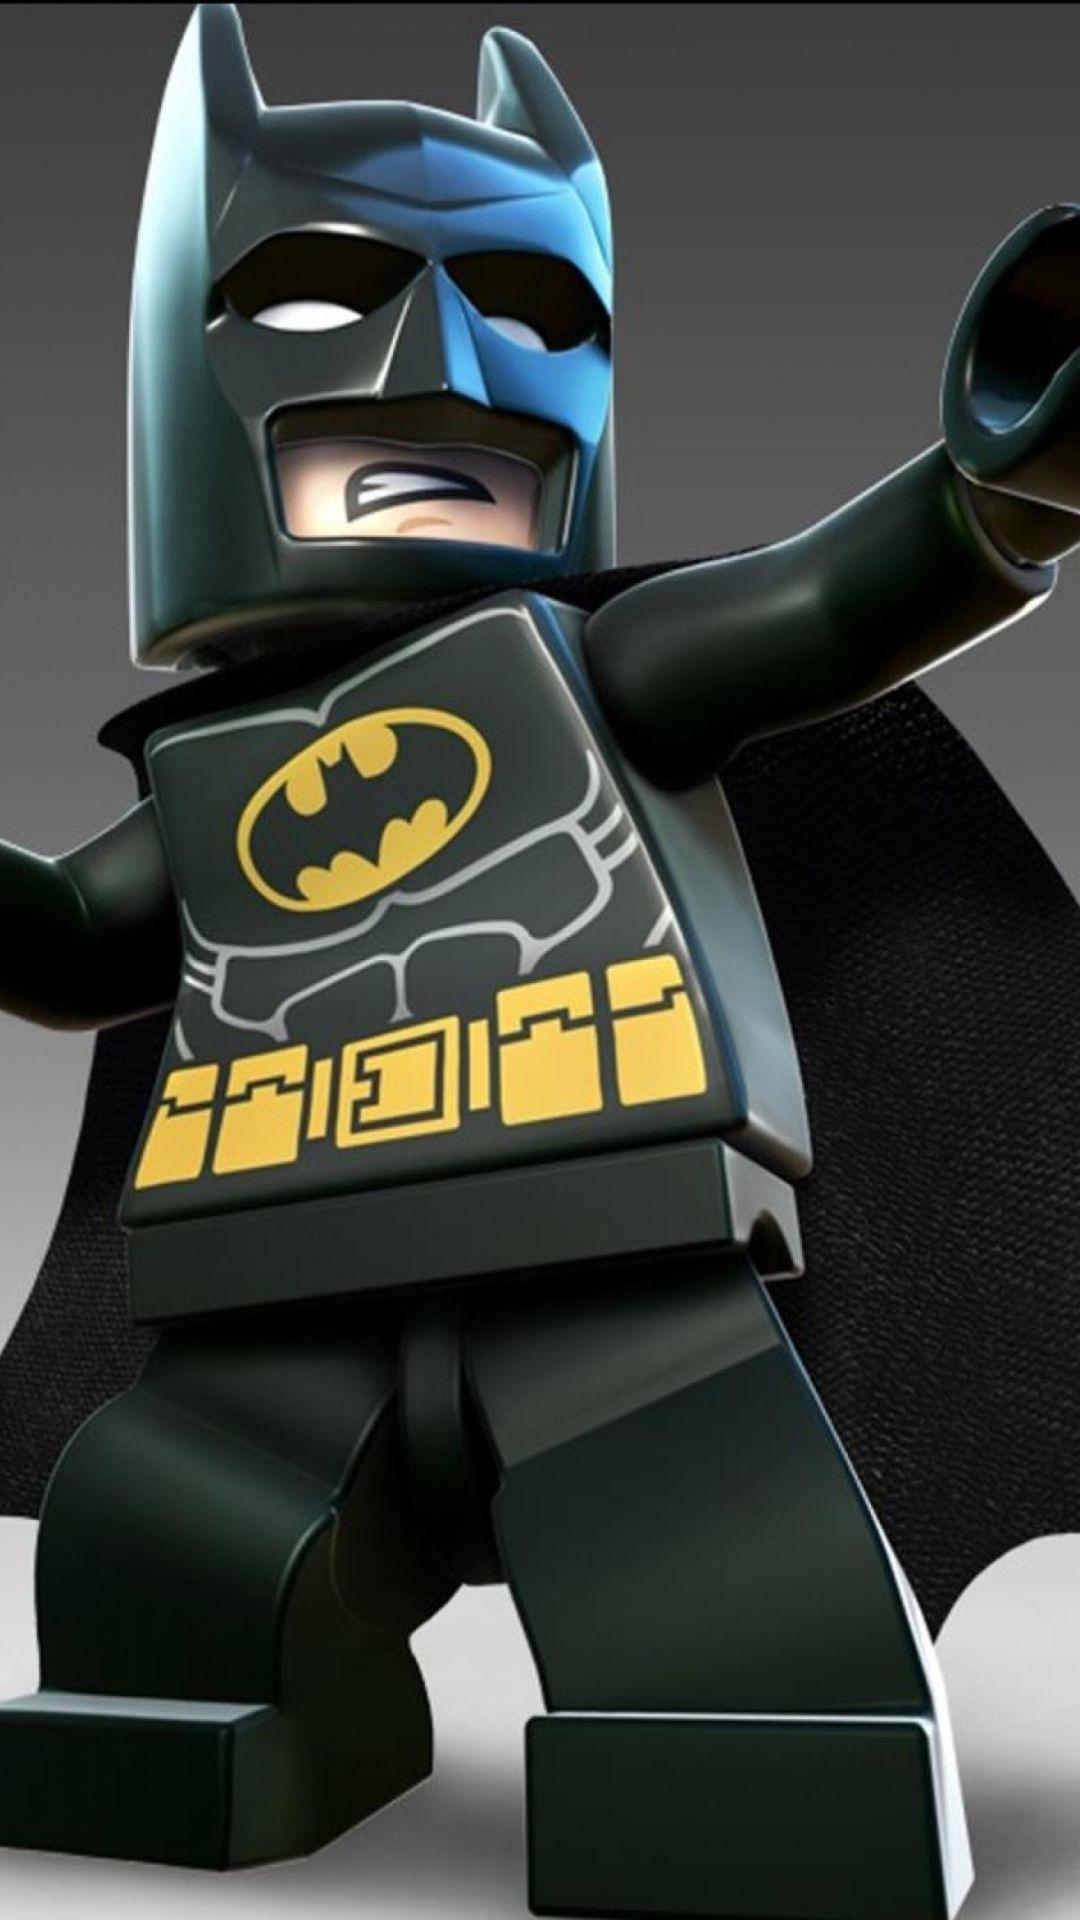 Batman LEGO Face Wallpapers - Top Free Batman LEGO Face Backgrounds ...